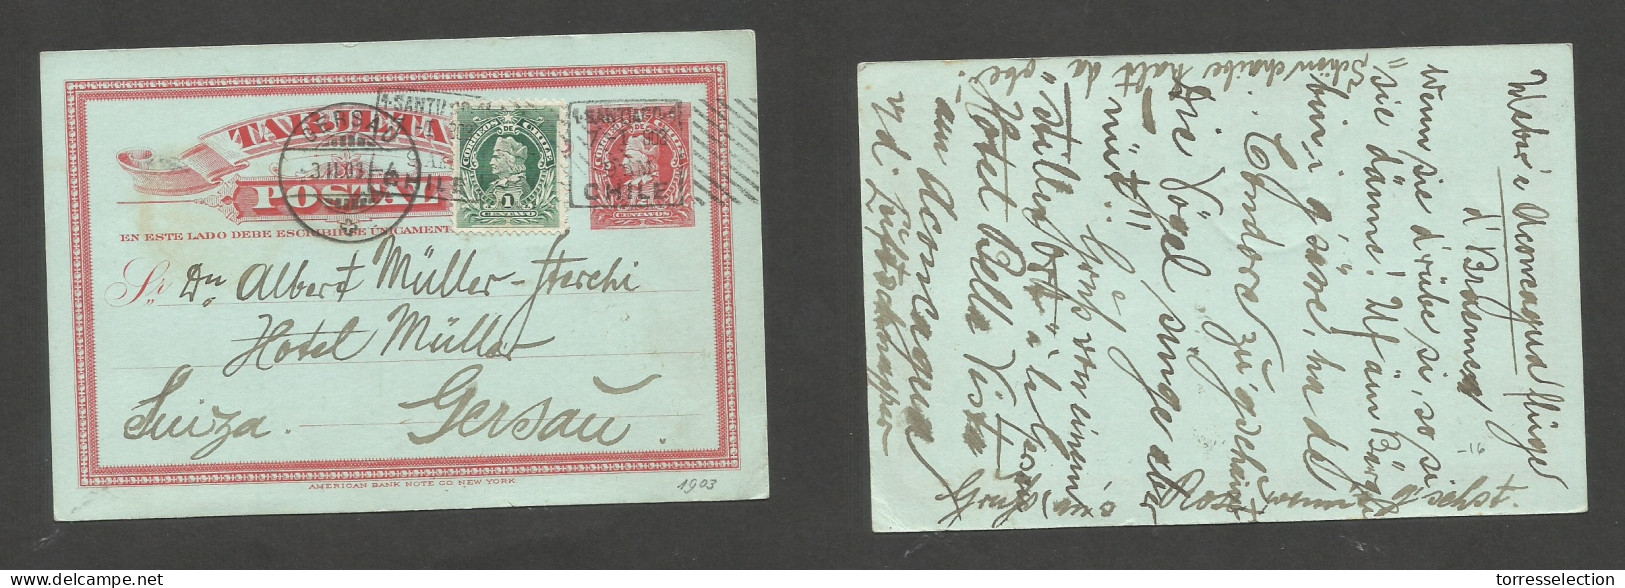 CHILE - Stationery. 1903 (7 Jan) Stgo - Switzerland, Gersan (3 Feb) 2c Red Stat Card + 1c Green Adtl, Tied Box Ds Grill. - Cile